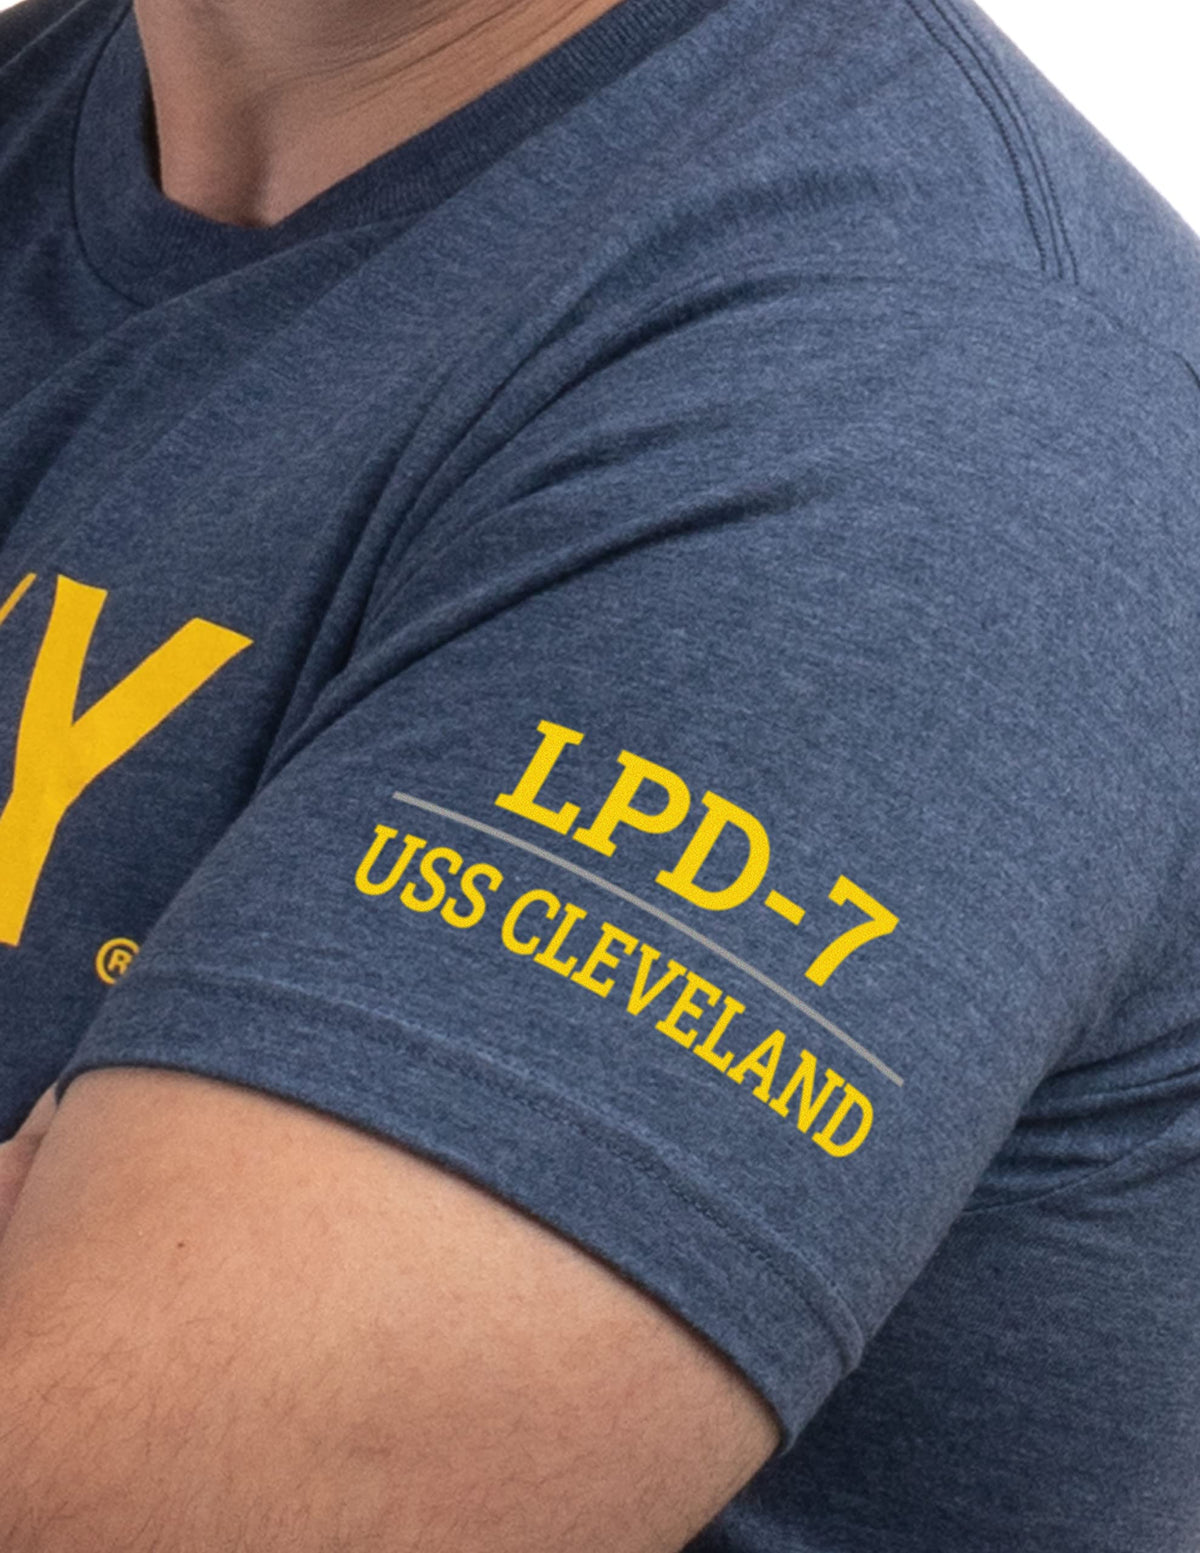 USS Cleveland, LPD-7 | U.S. Navy Sailor Veteran USN United States Naval T-shirt for Men Women